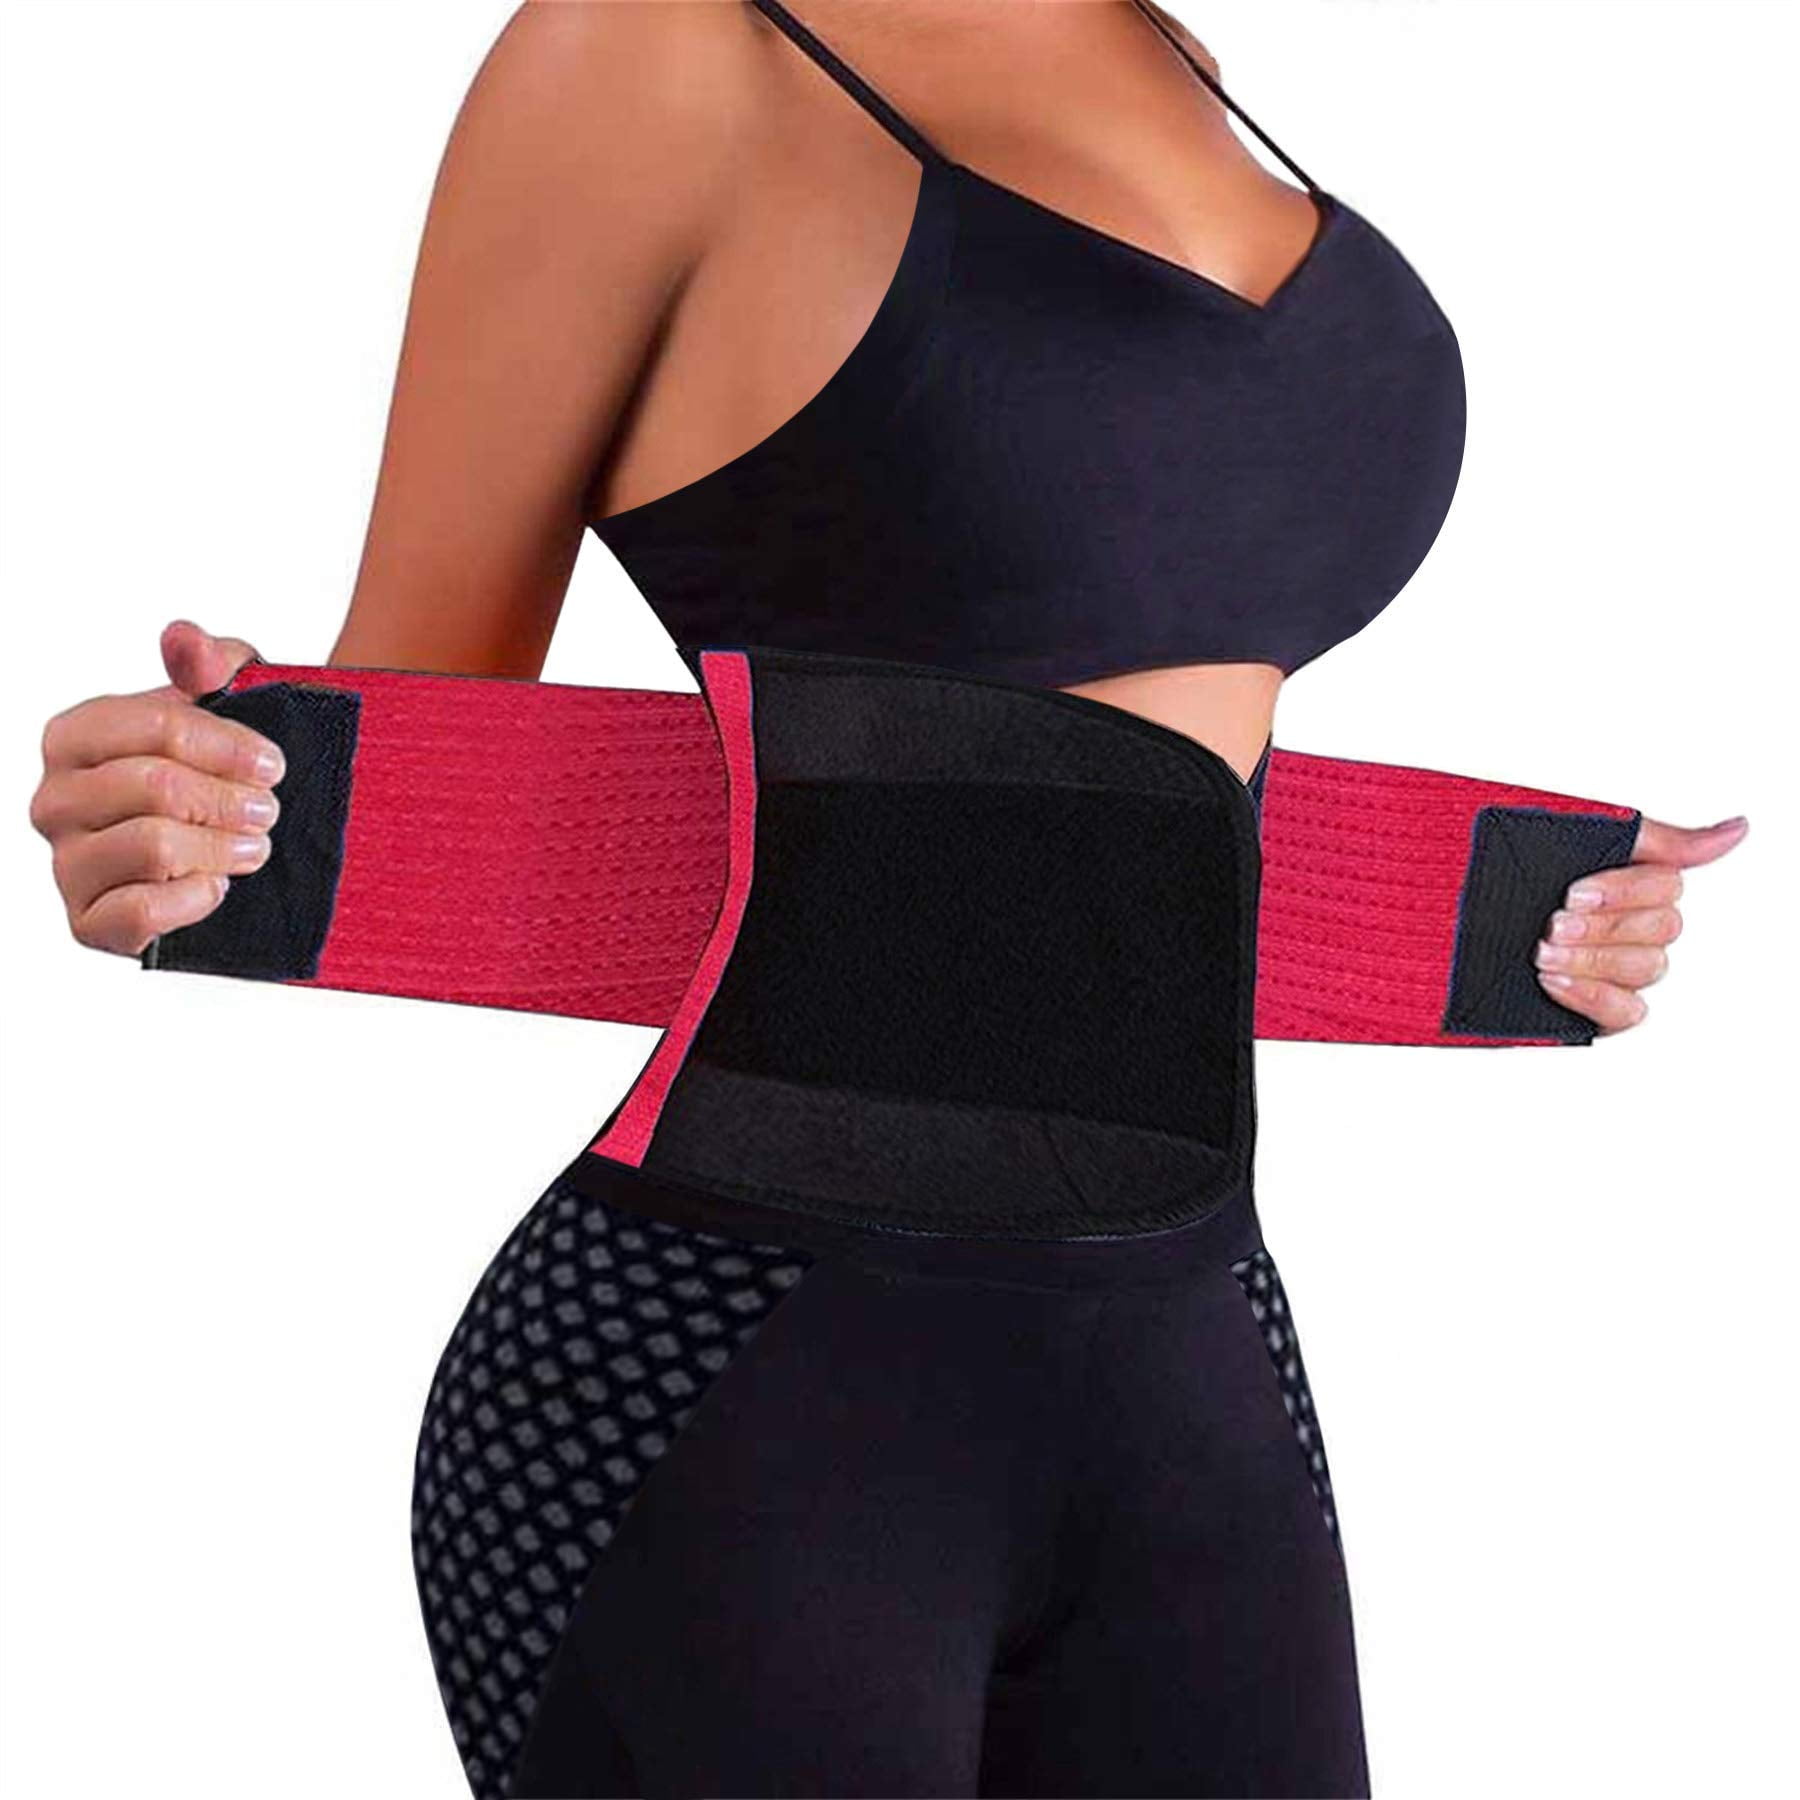 VENUZOR Waist Trainer Belt for Women Slimming Body Shaper Back Braces Sauna  Hot Sweat Trimmer Control Waist Cincher Workout Girdle Slim Band 